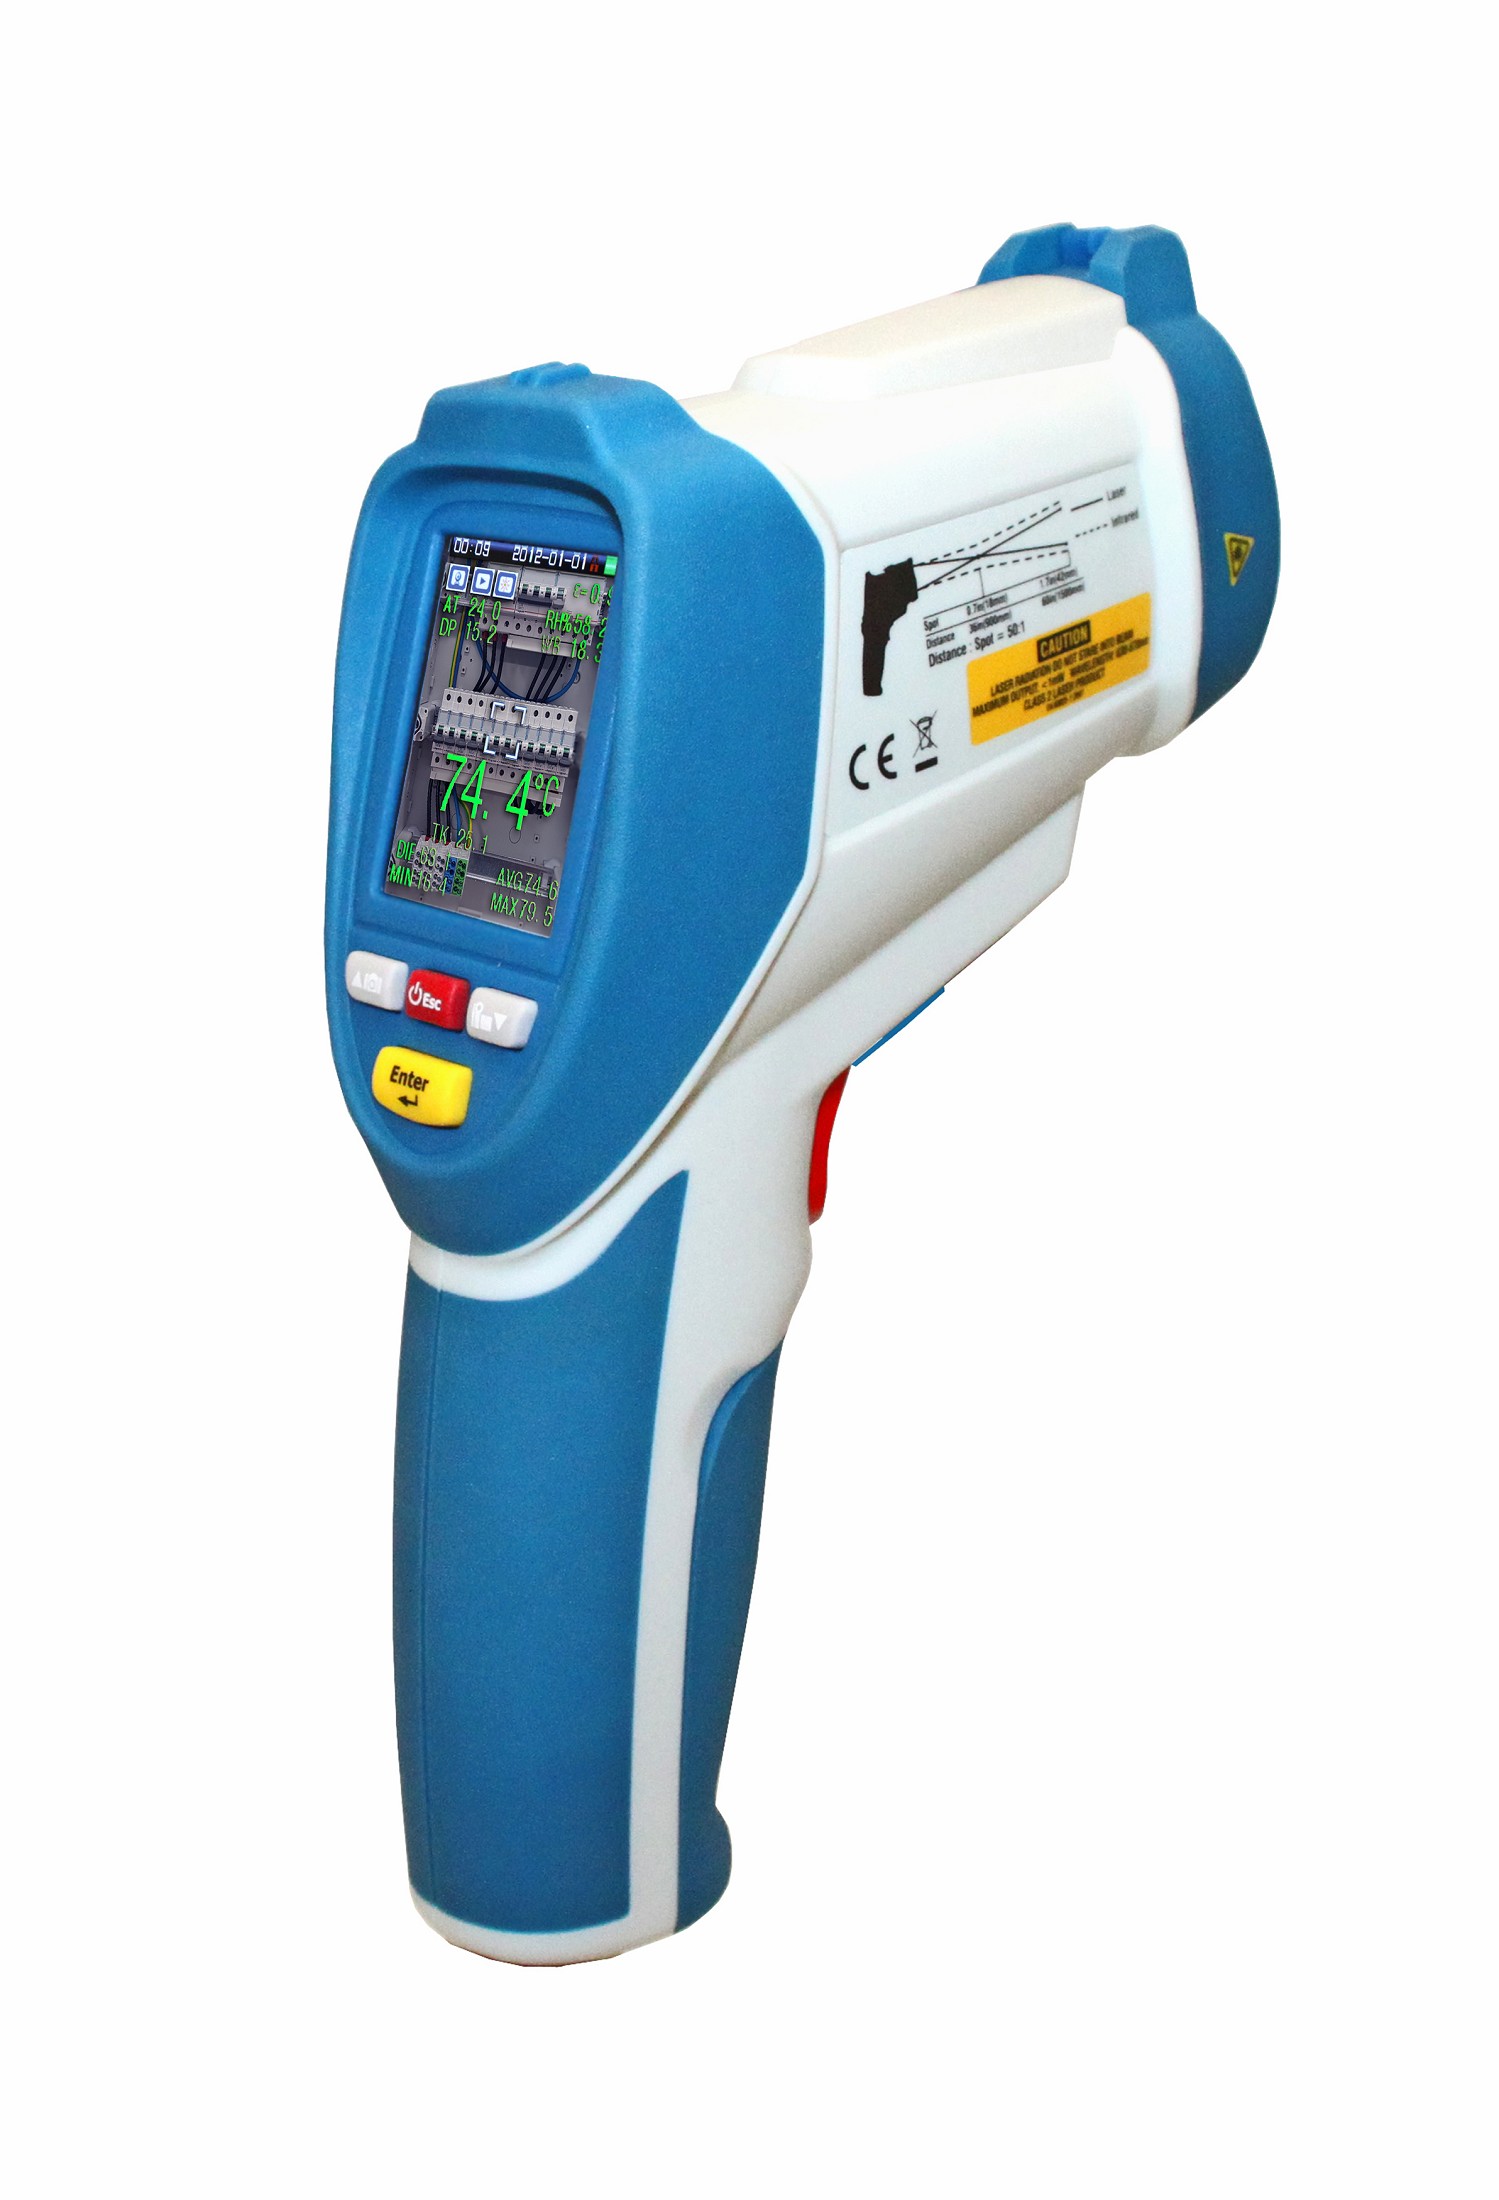 «PeakTech® P 4955» IR-Thermometer -50 … +2200°C, Datalogger, Video